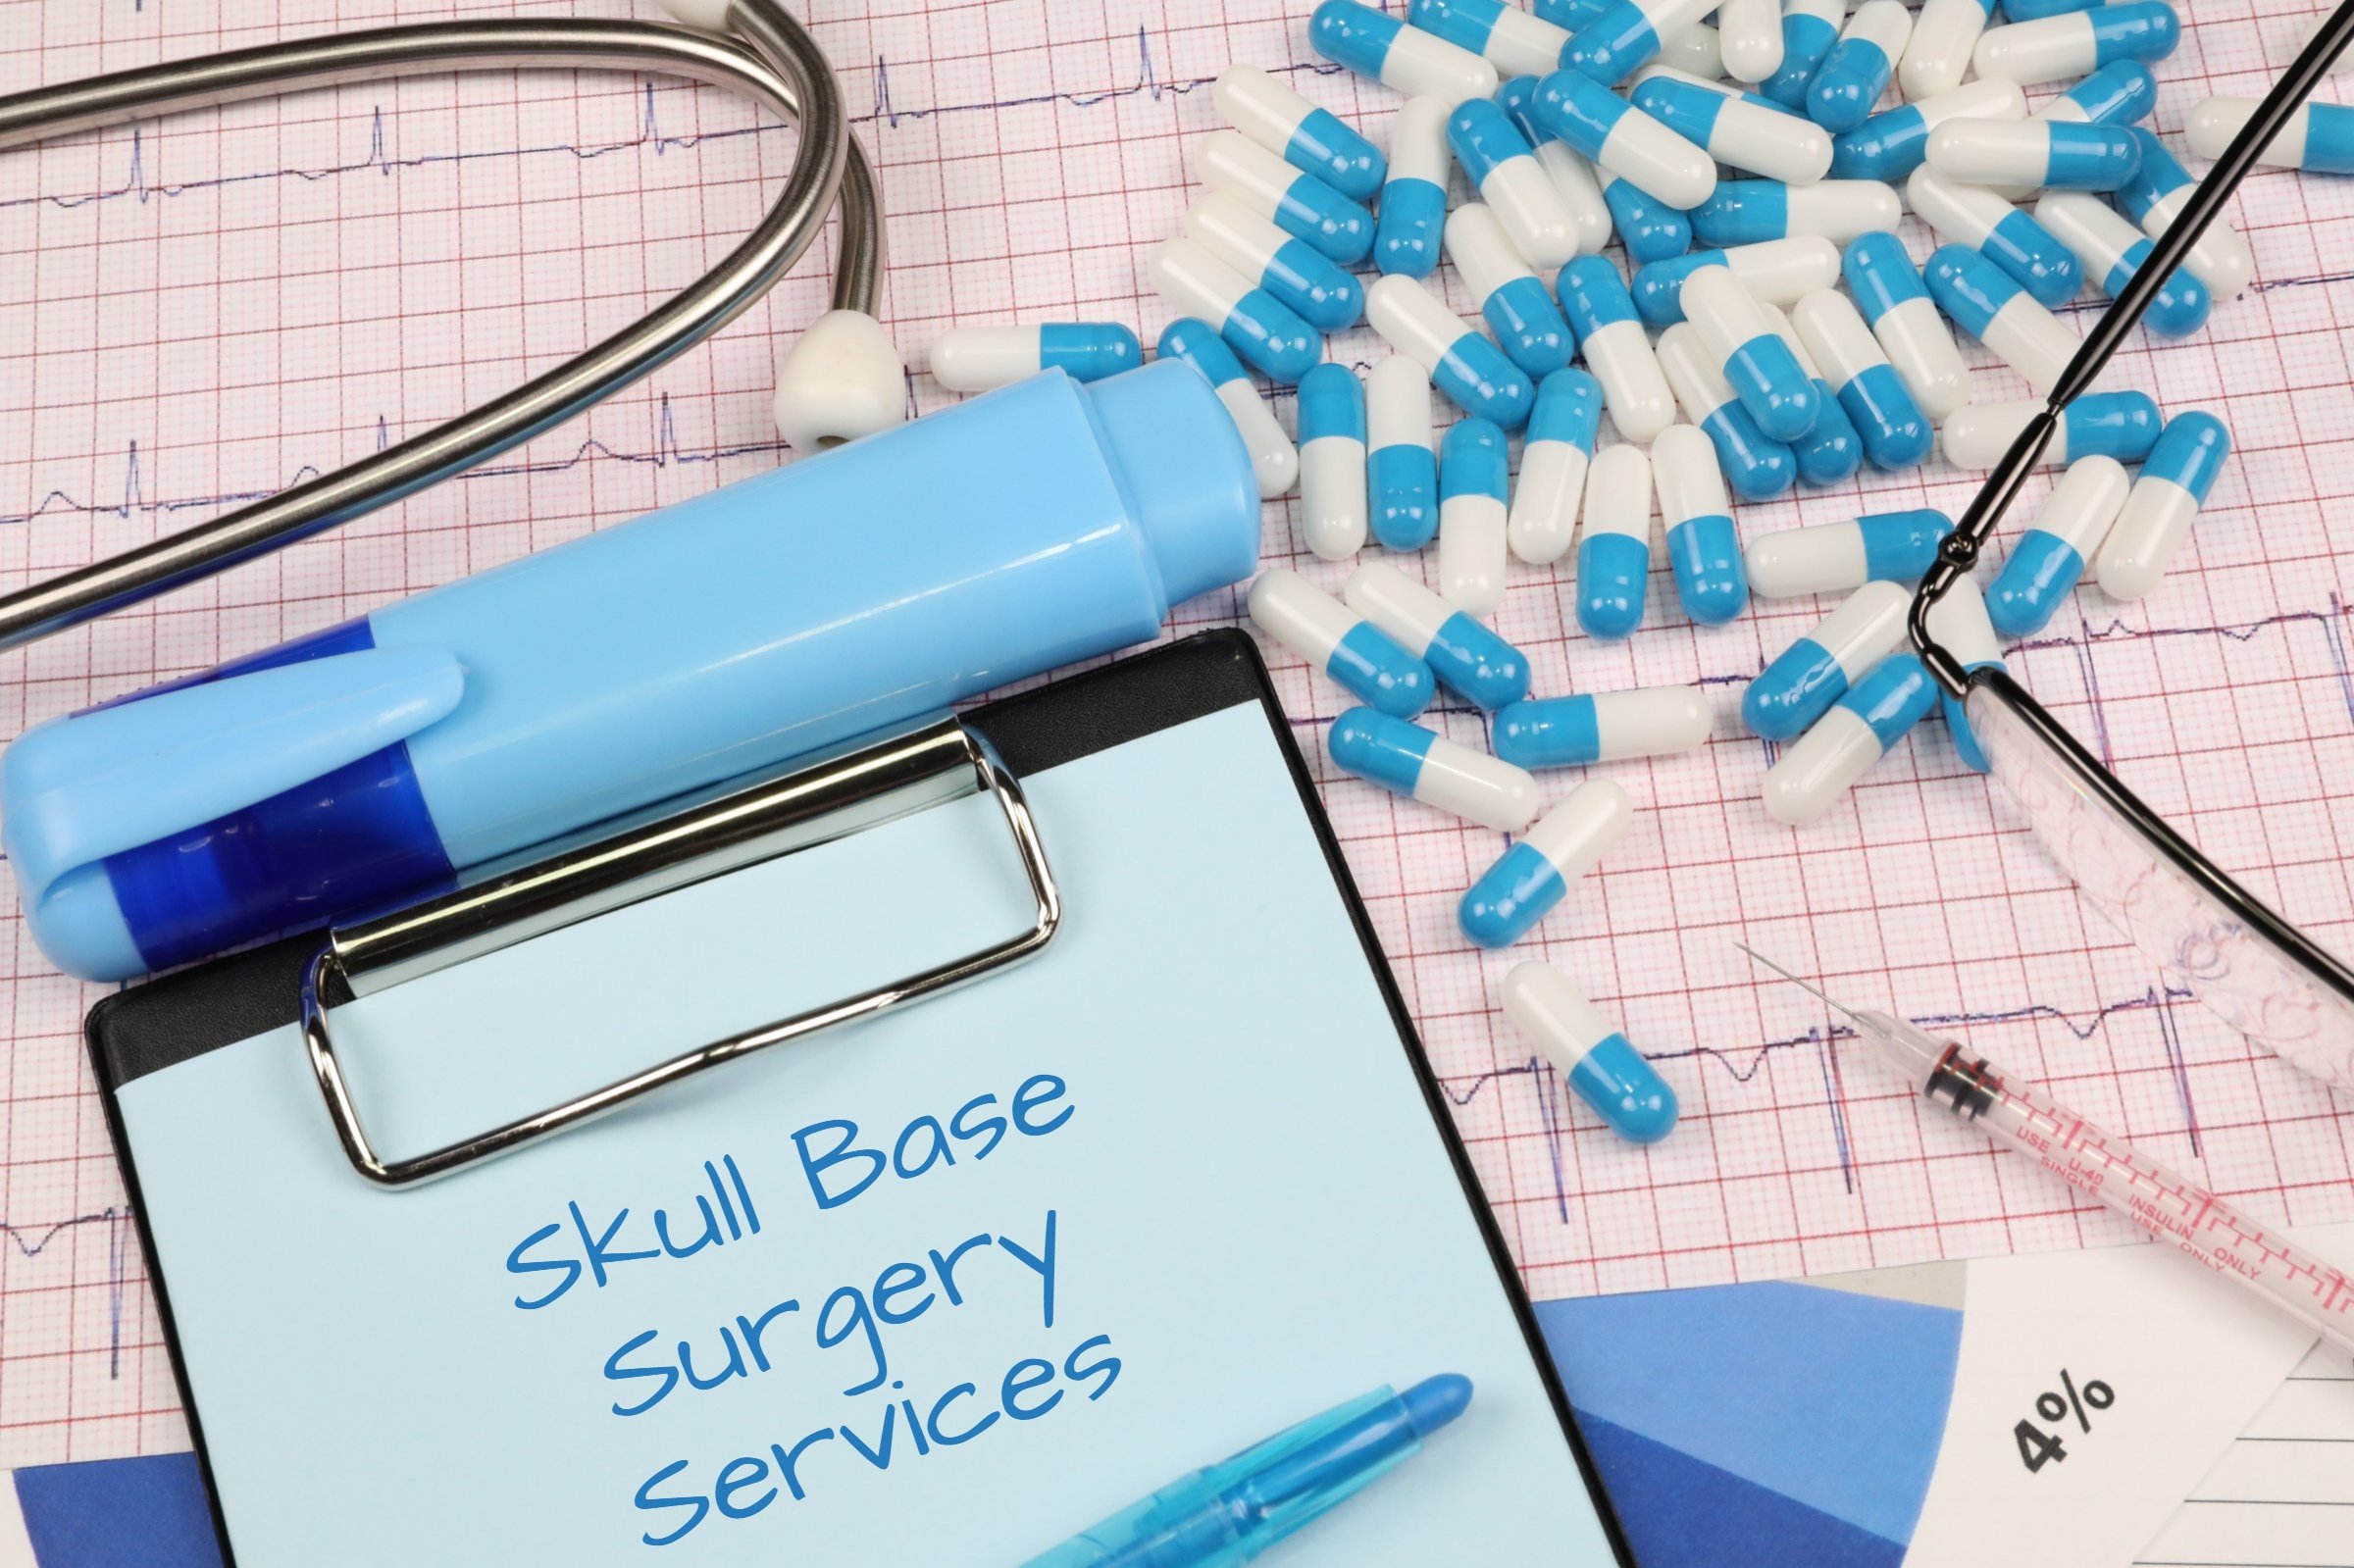 skull base surgery services